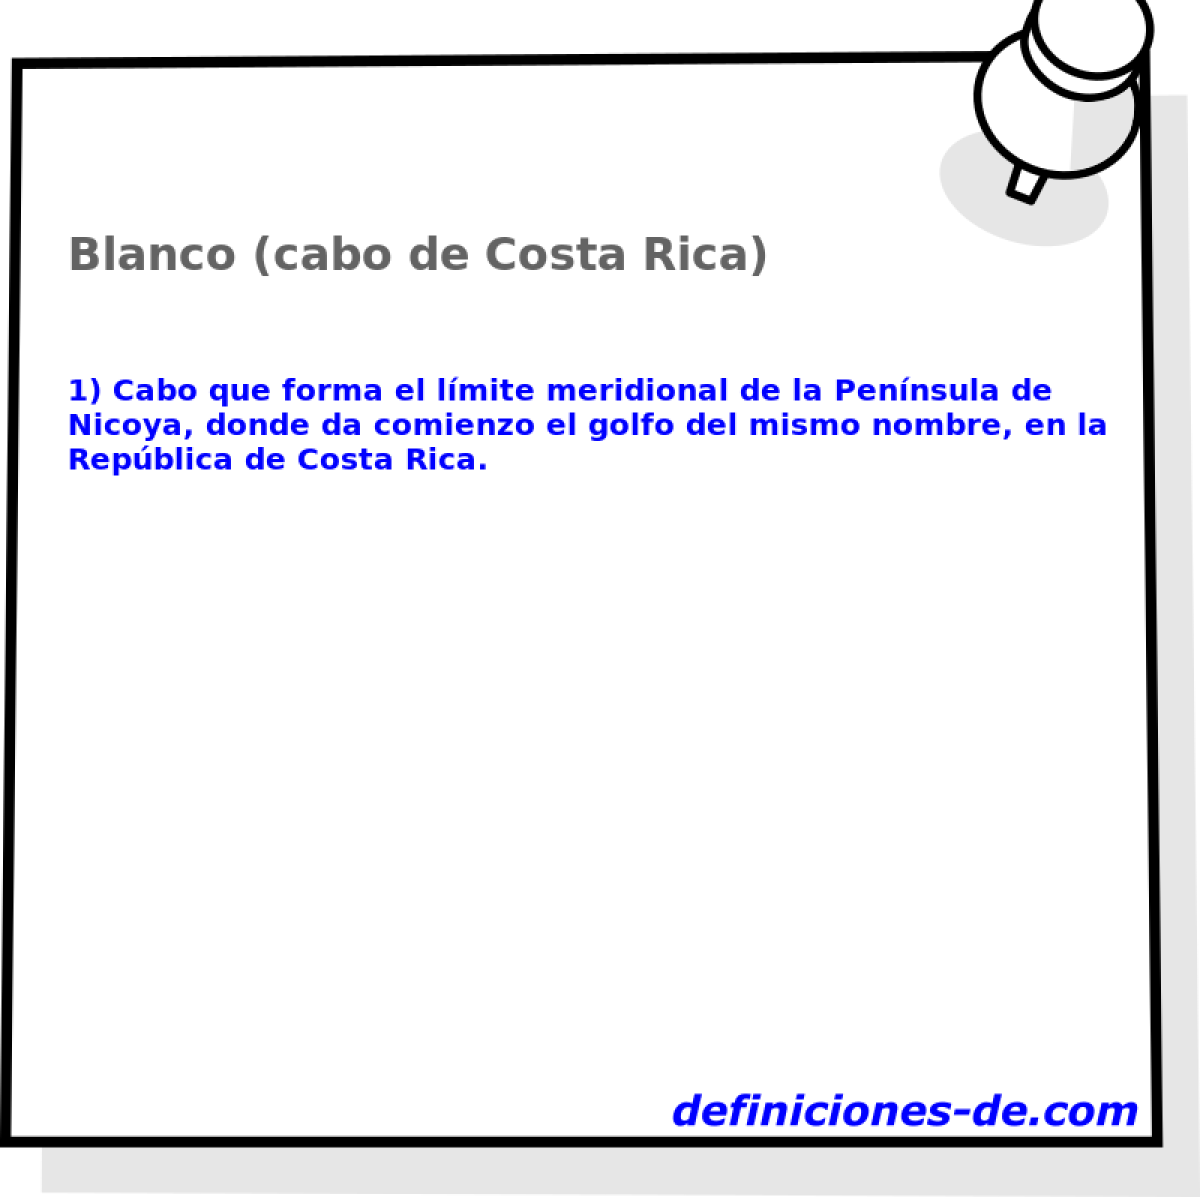 Blanco (cabo de Costa Rica) 